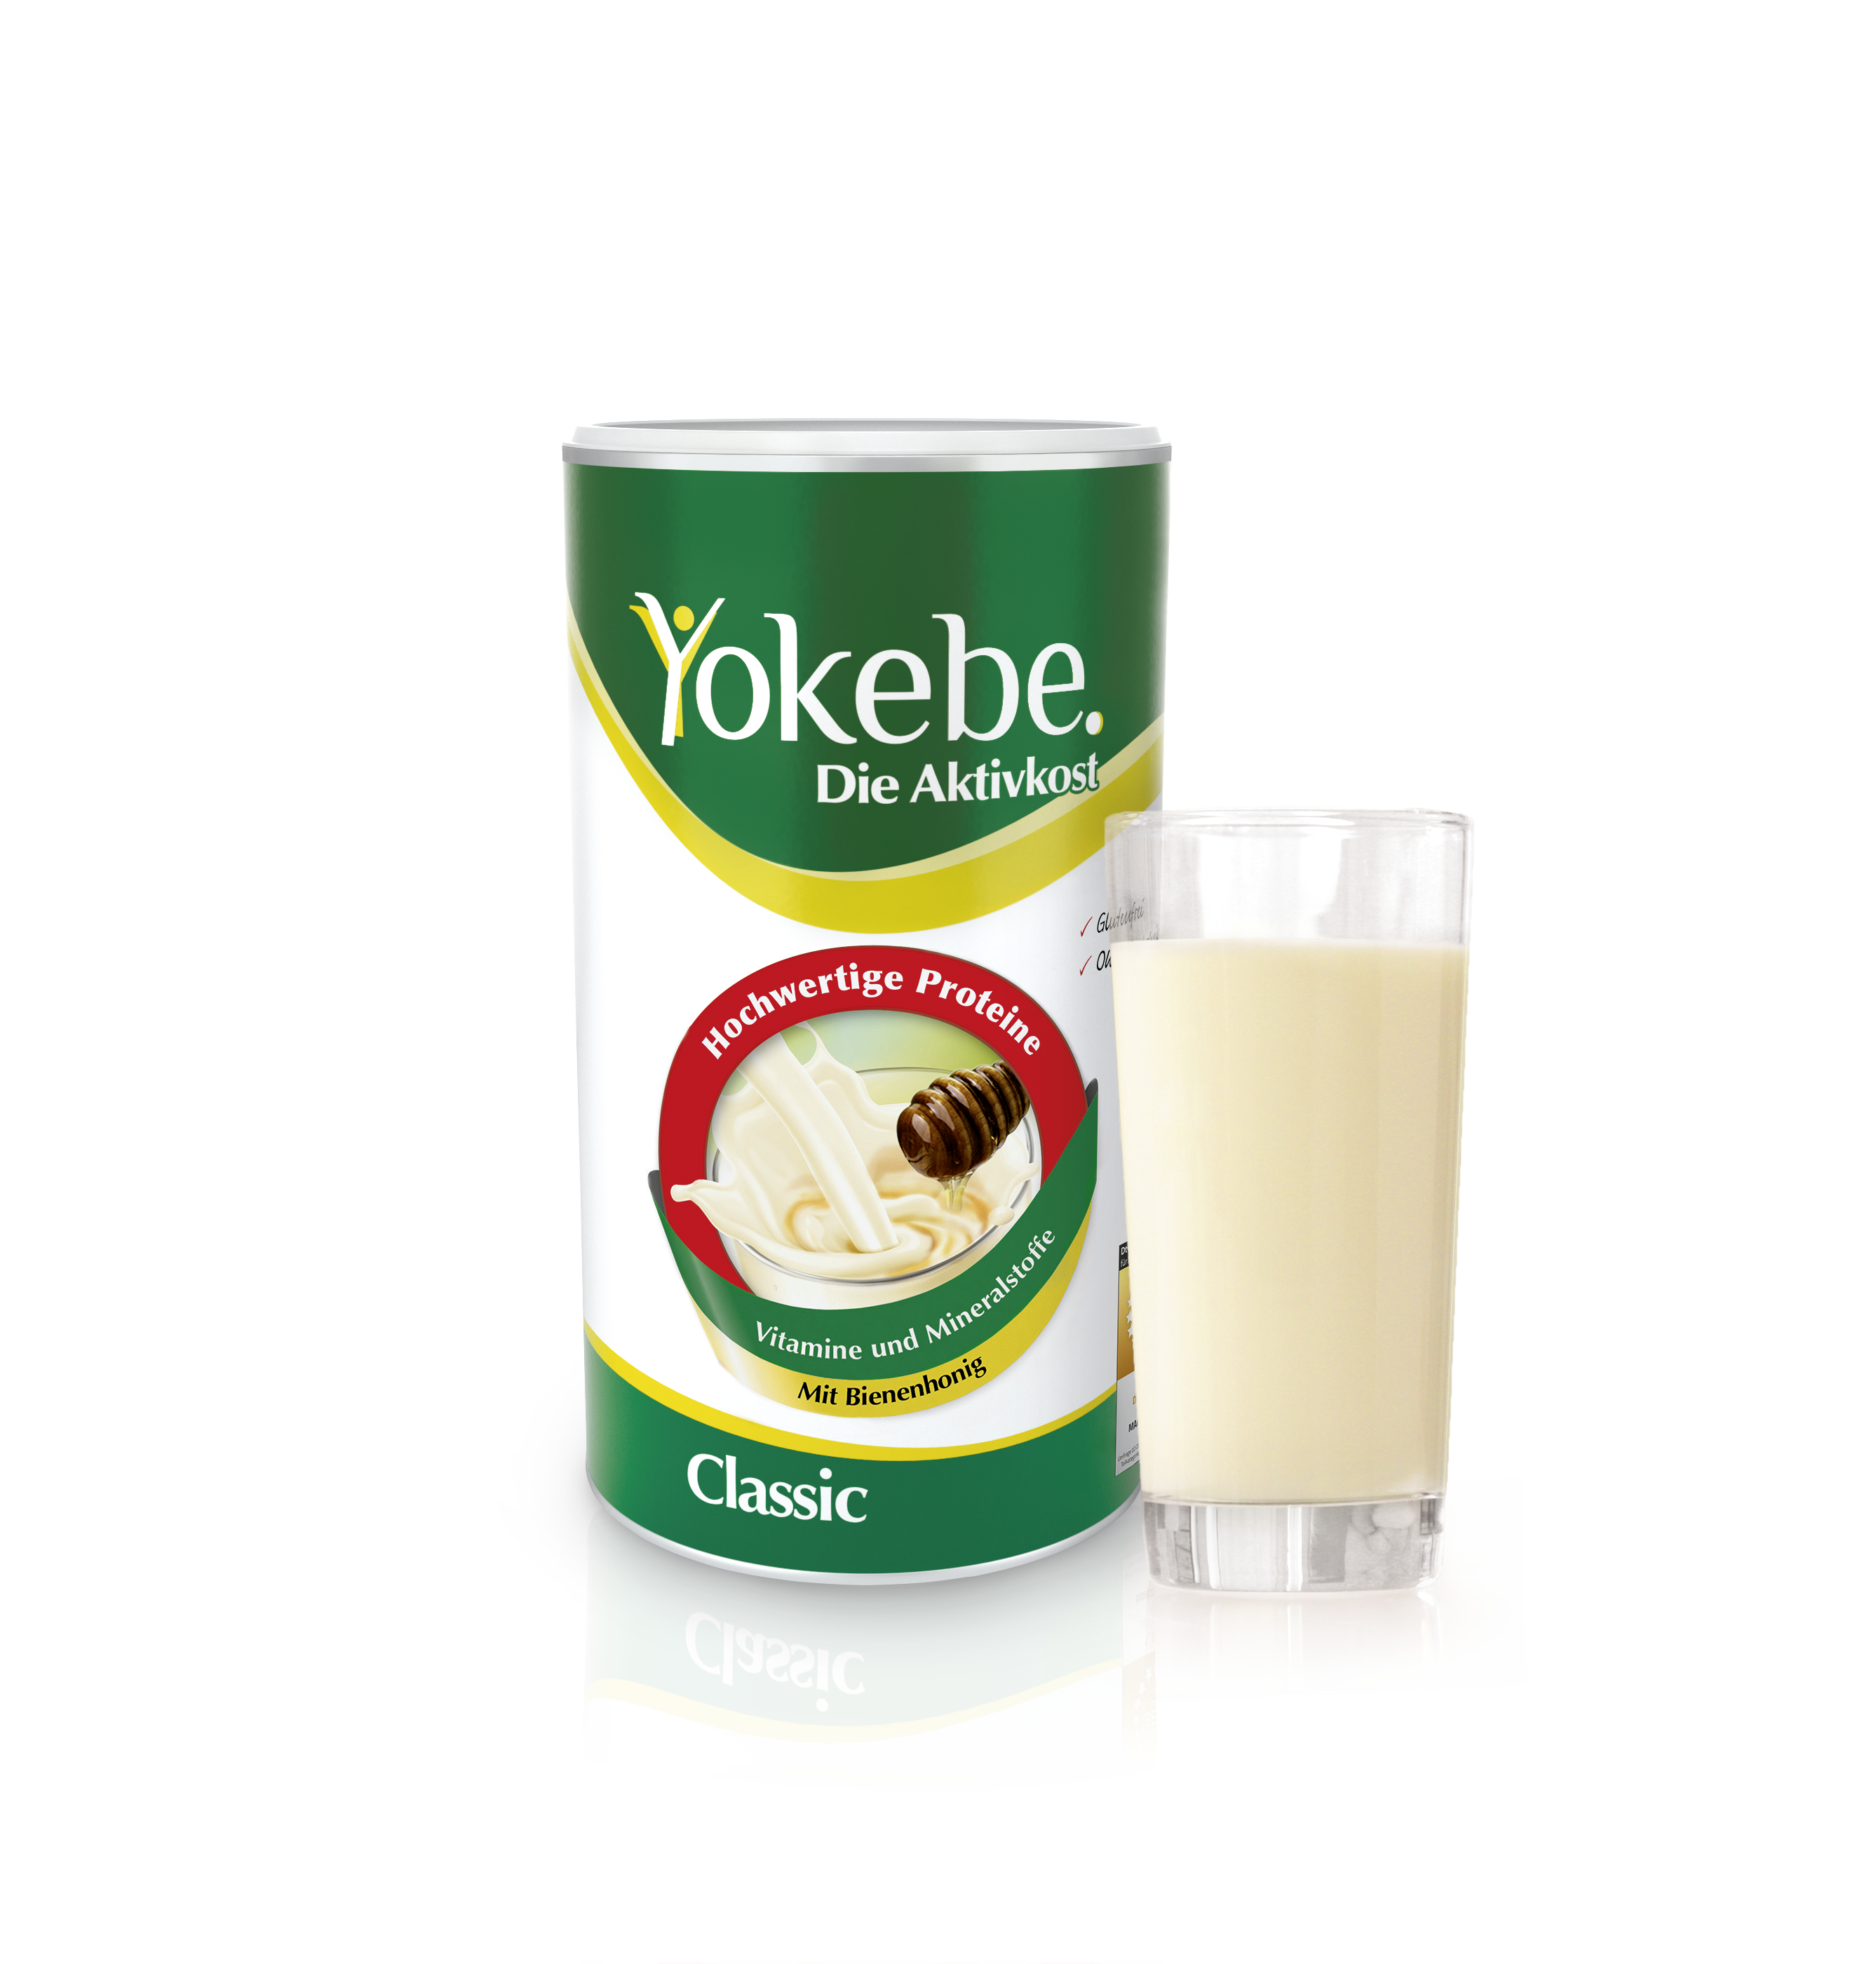 Yokebe Classic vitamine und mineralstoffe